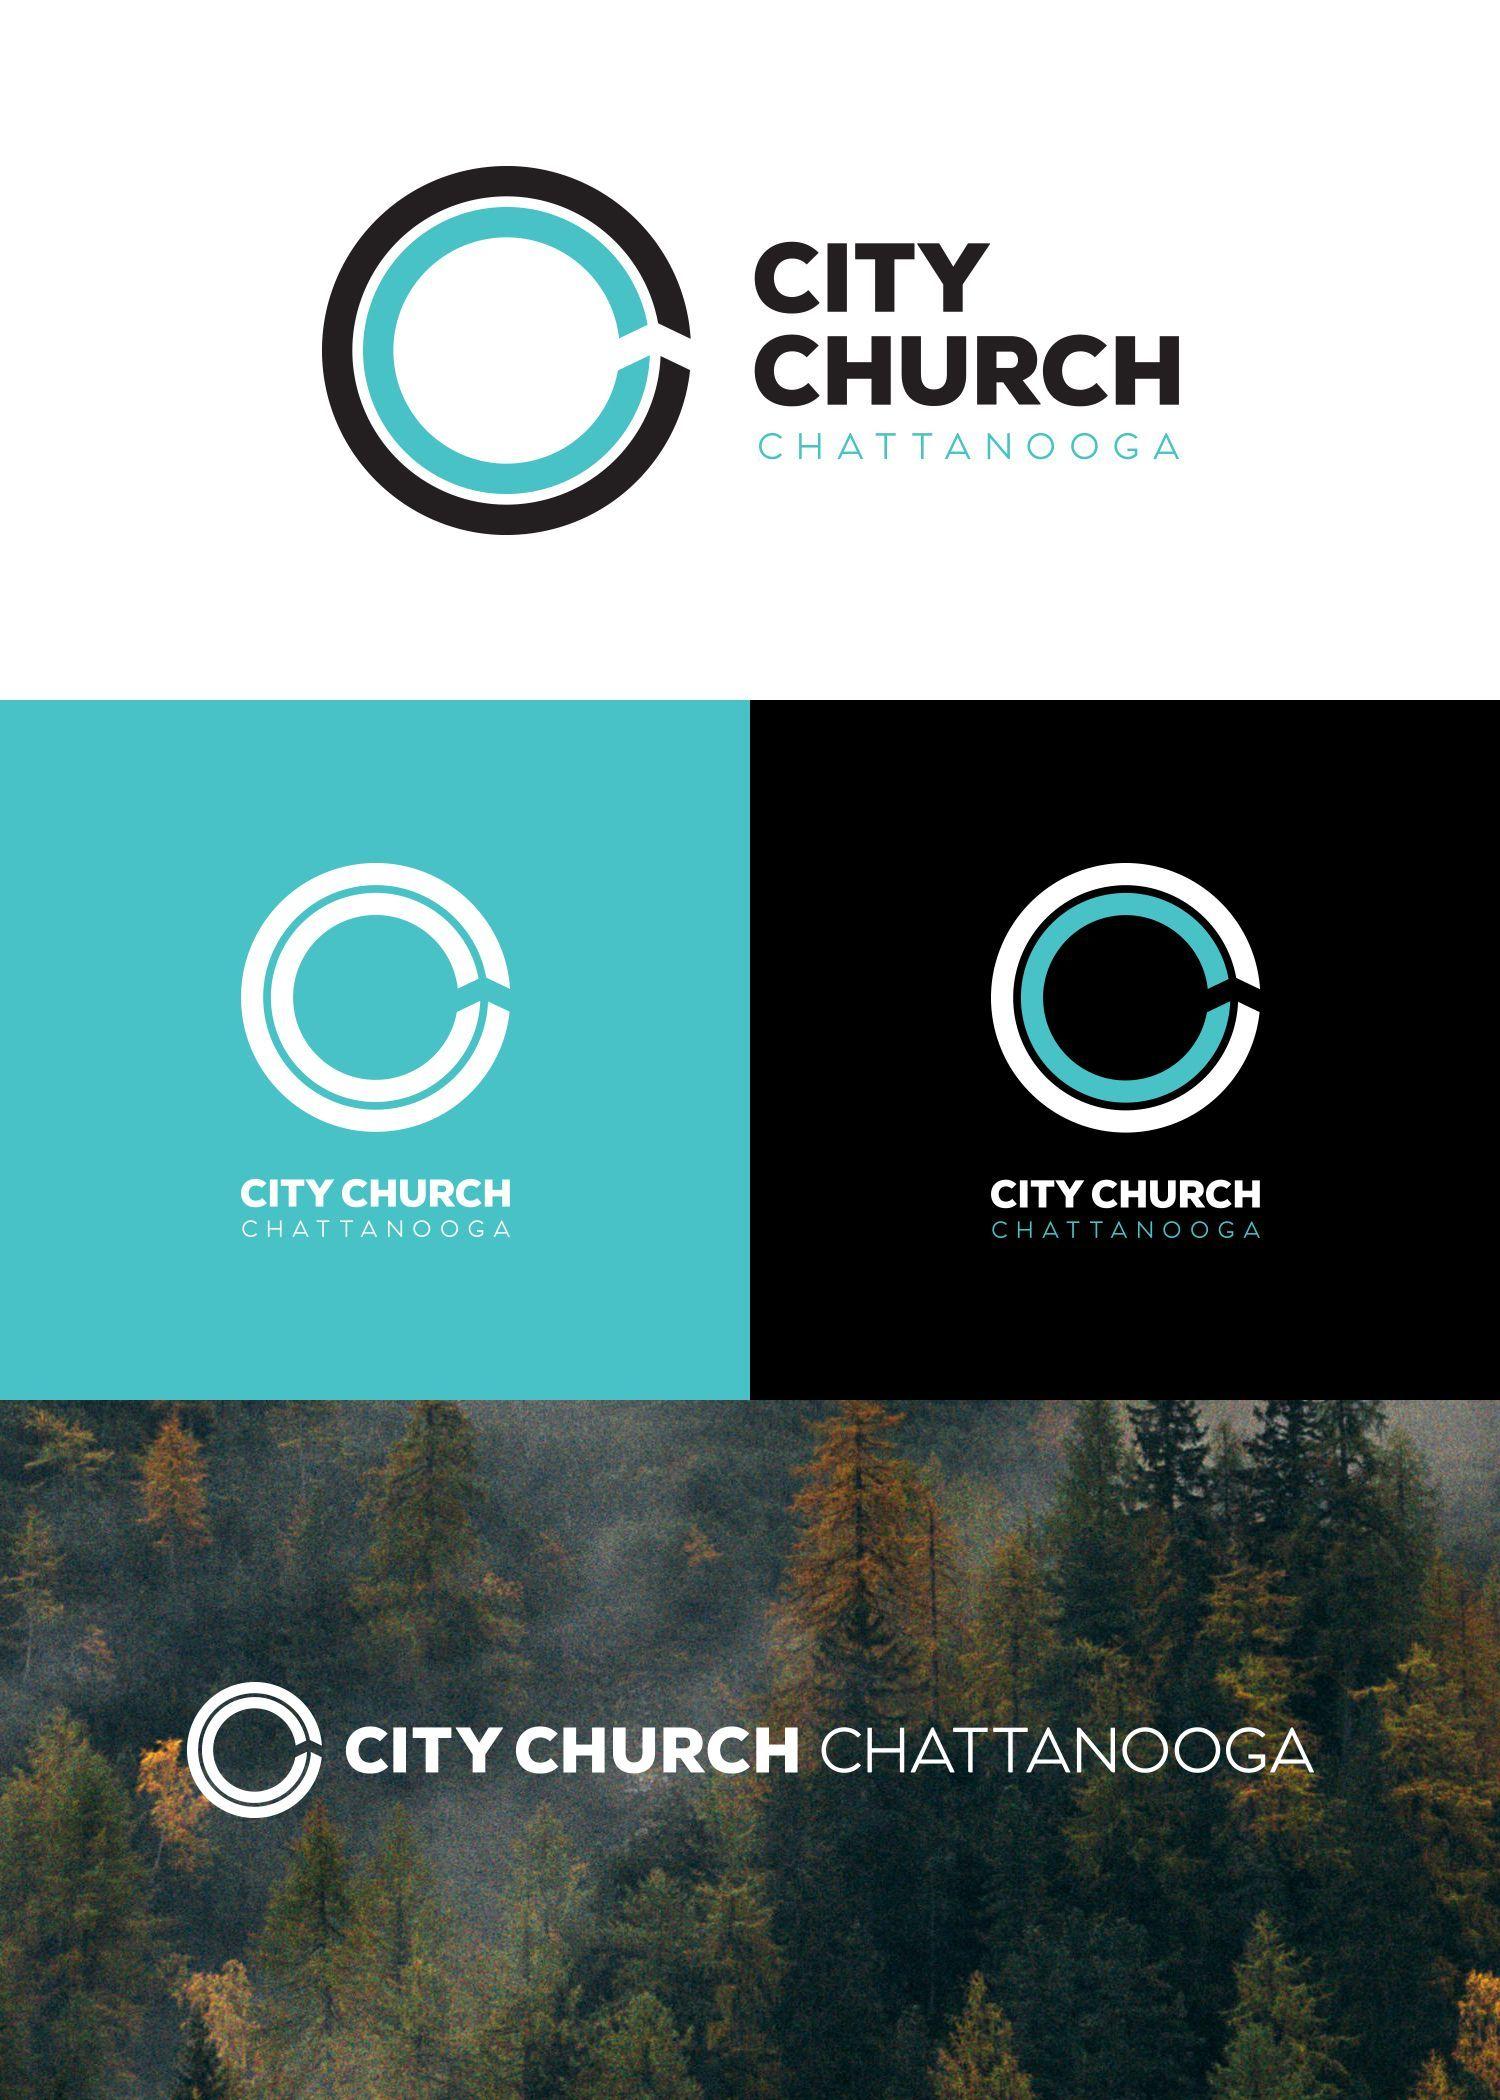 Circle Church Logo - Chattanooga, City Church. Art & Design Inspiration